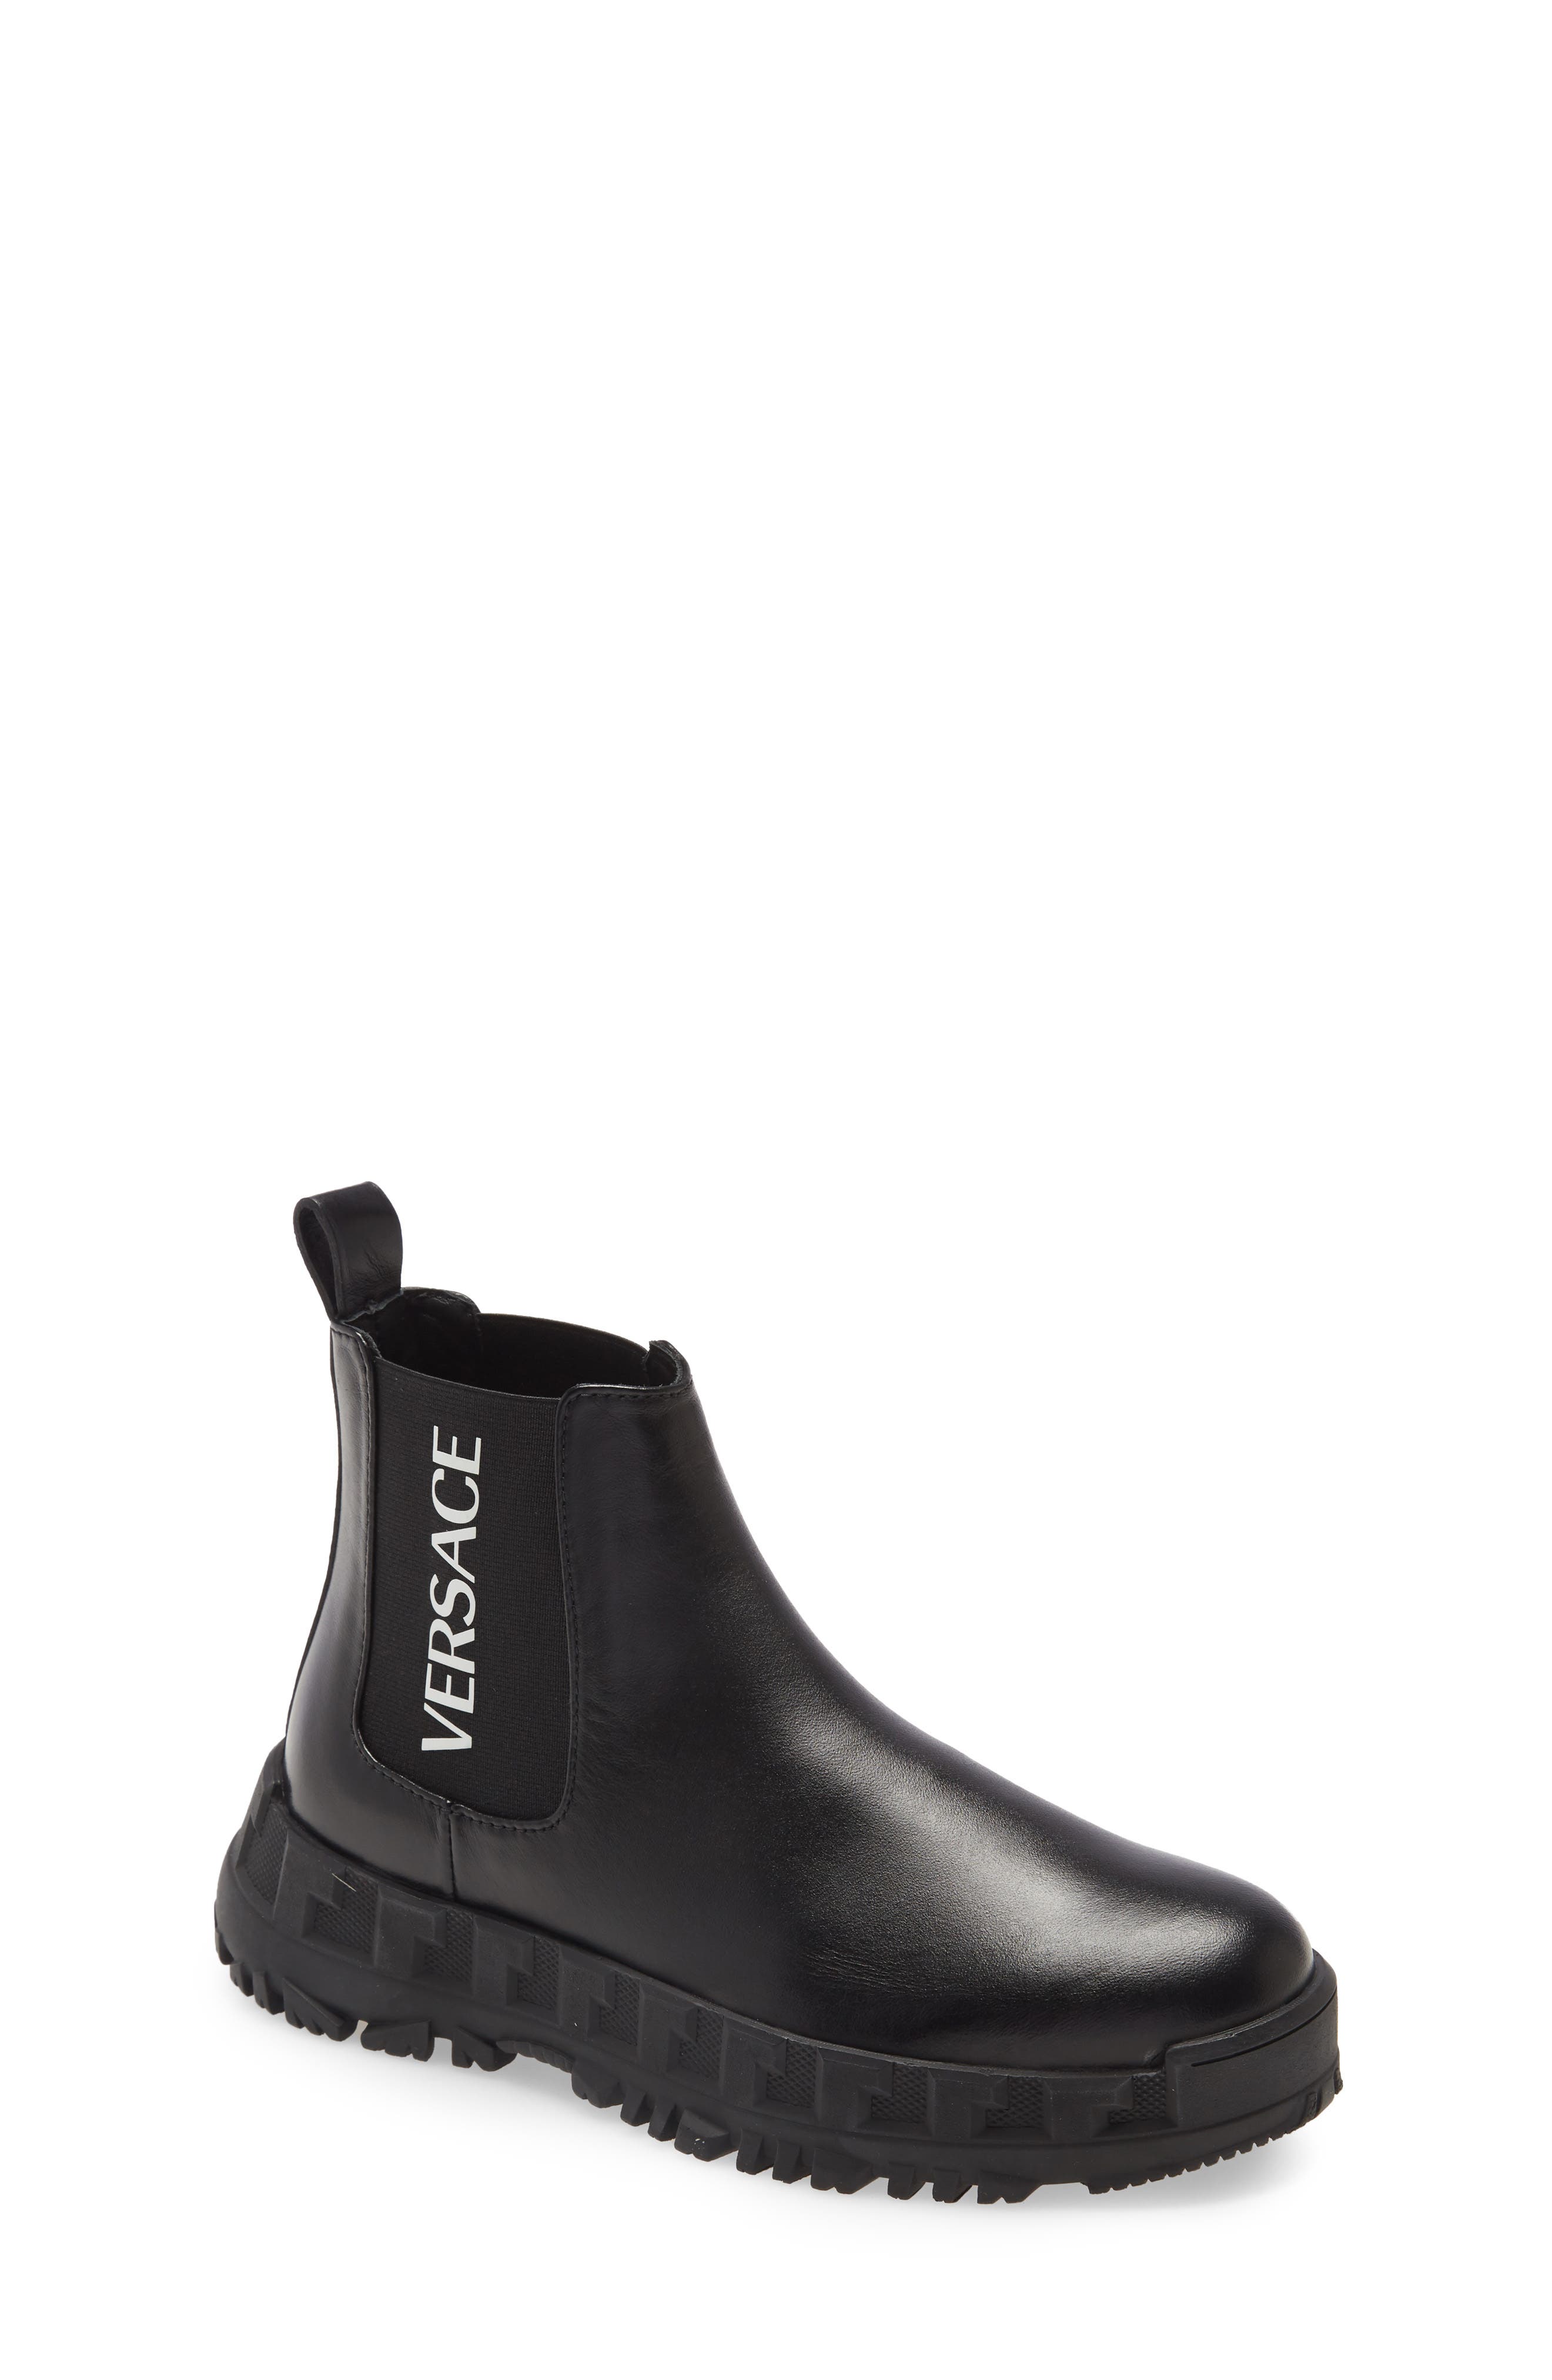 versace gift set boots